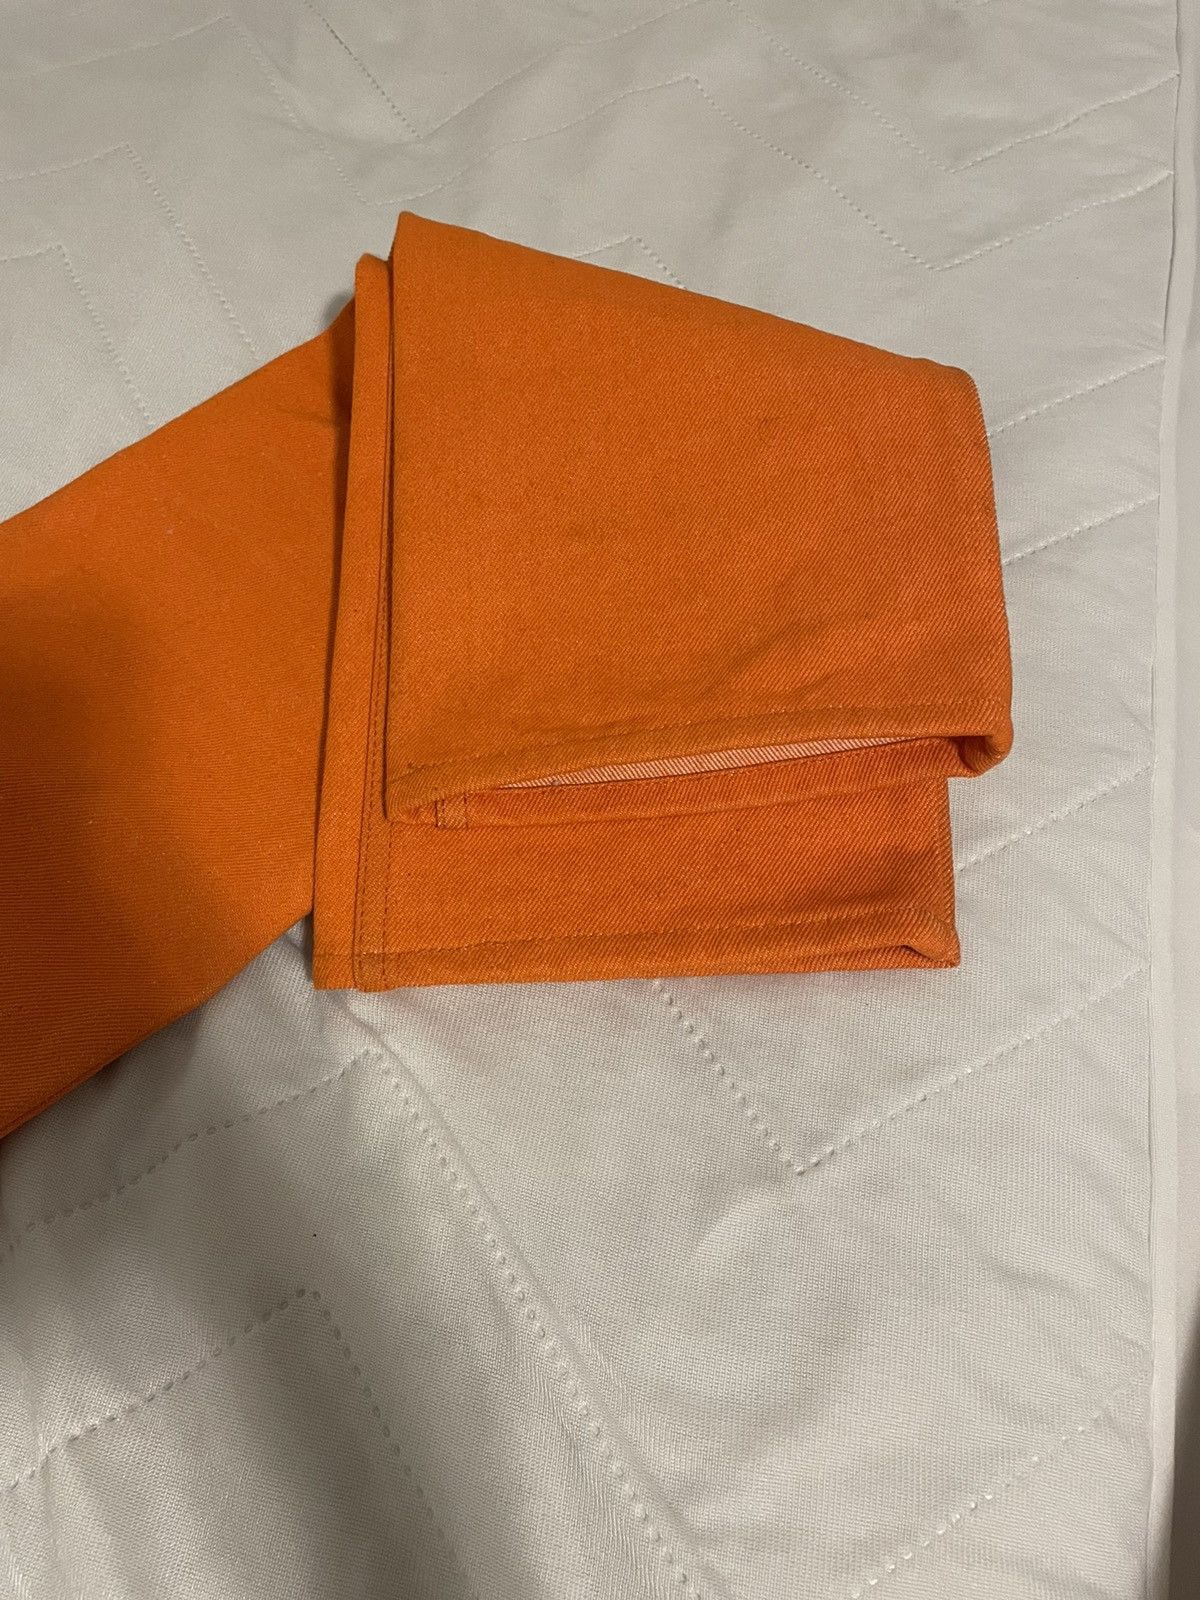 Helmut Lang Helmut Lang Safety Orange Raw Denim Jeans Size US 28 / EU 44 - 5 Thumbnail